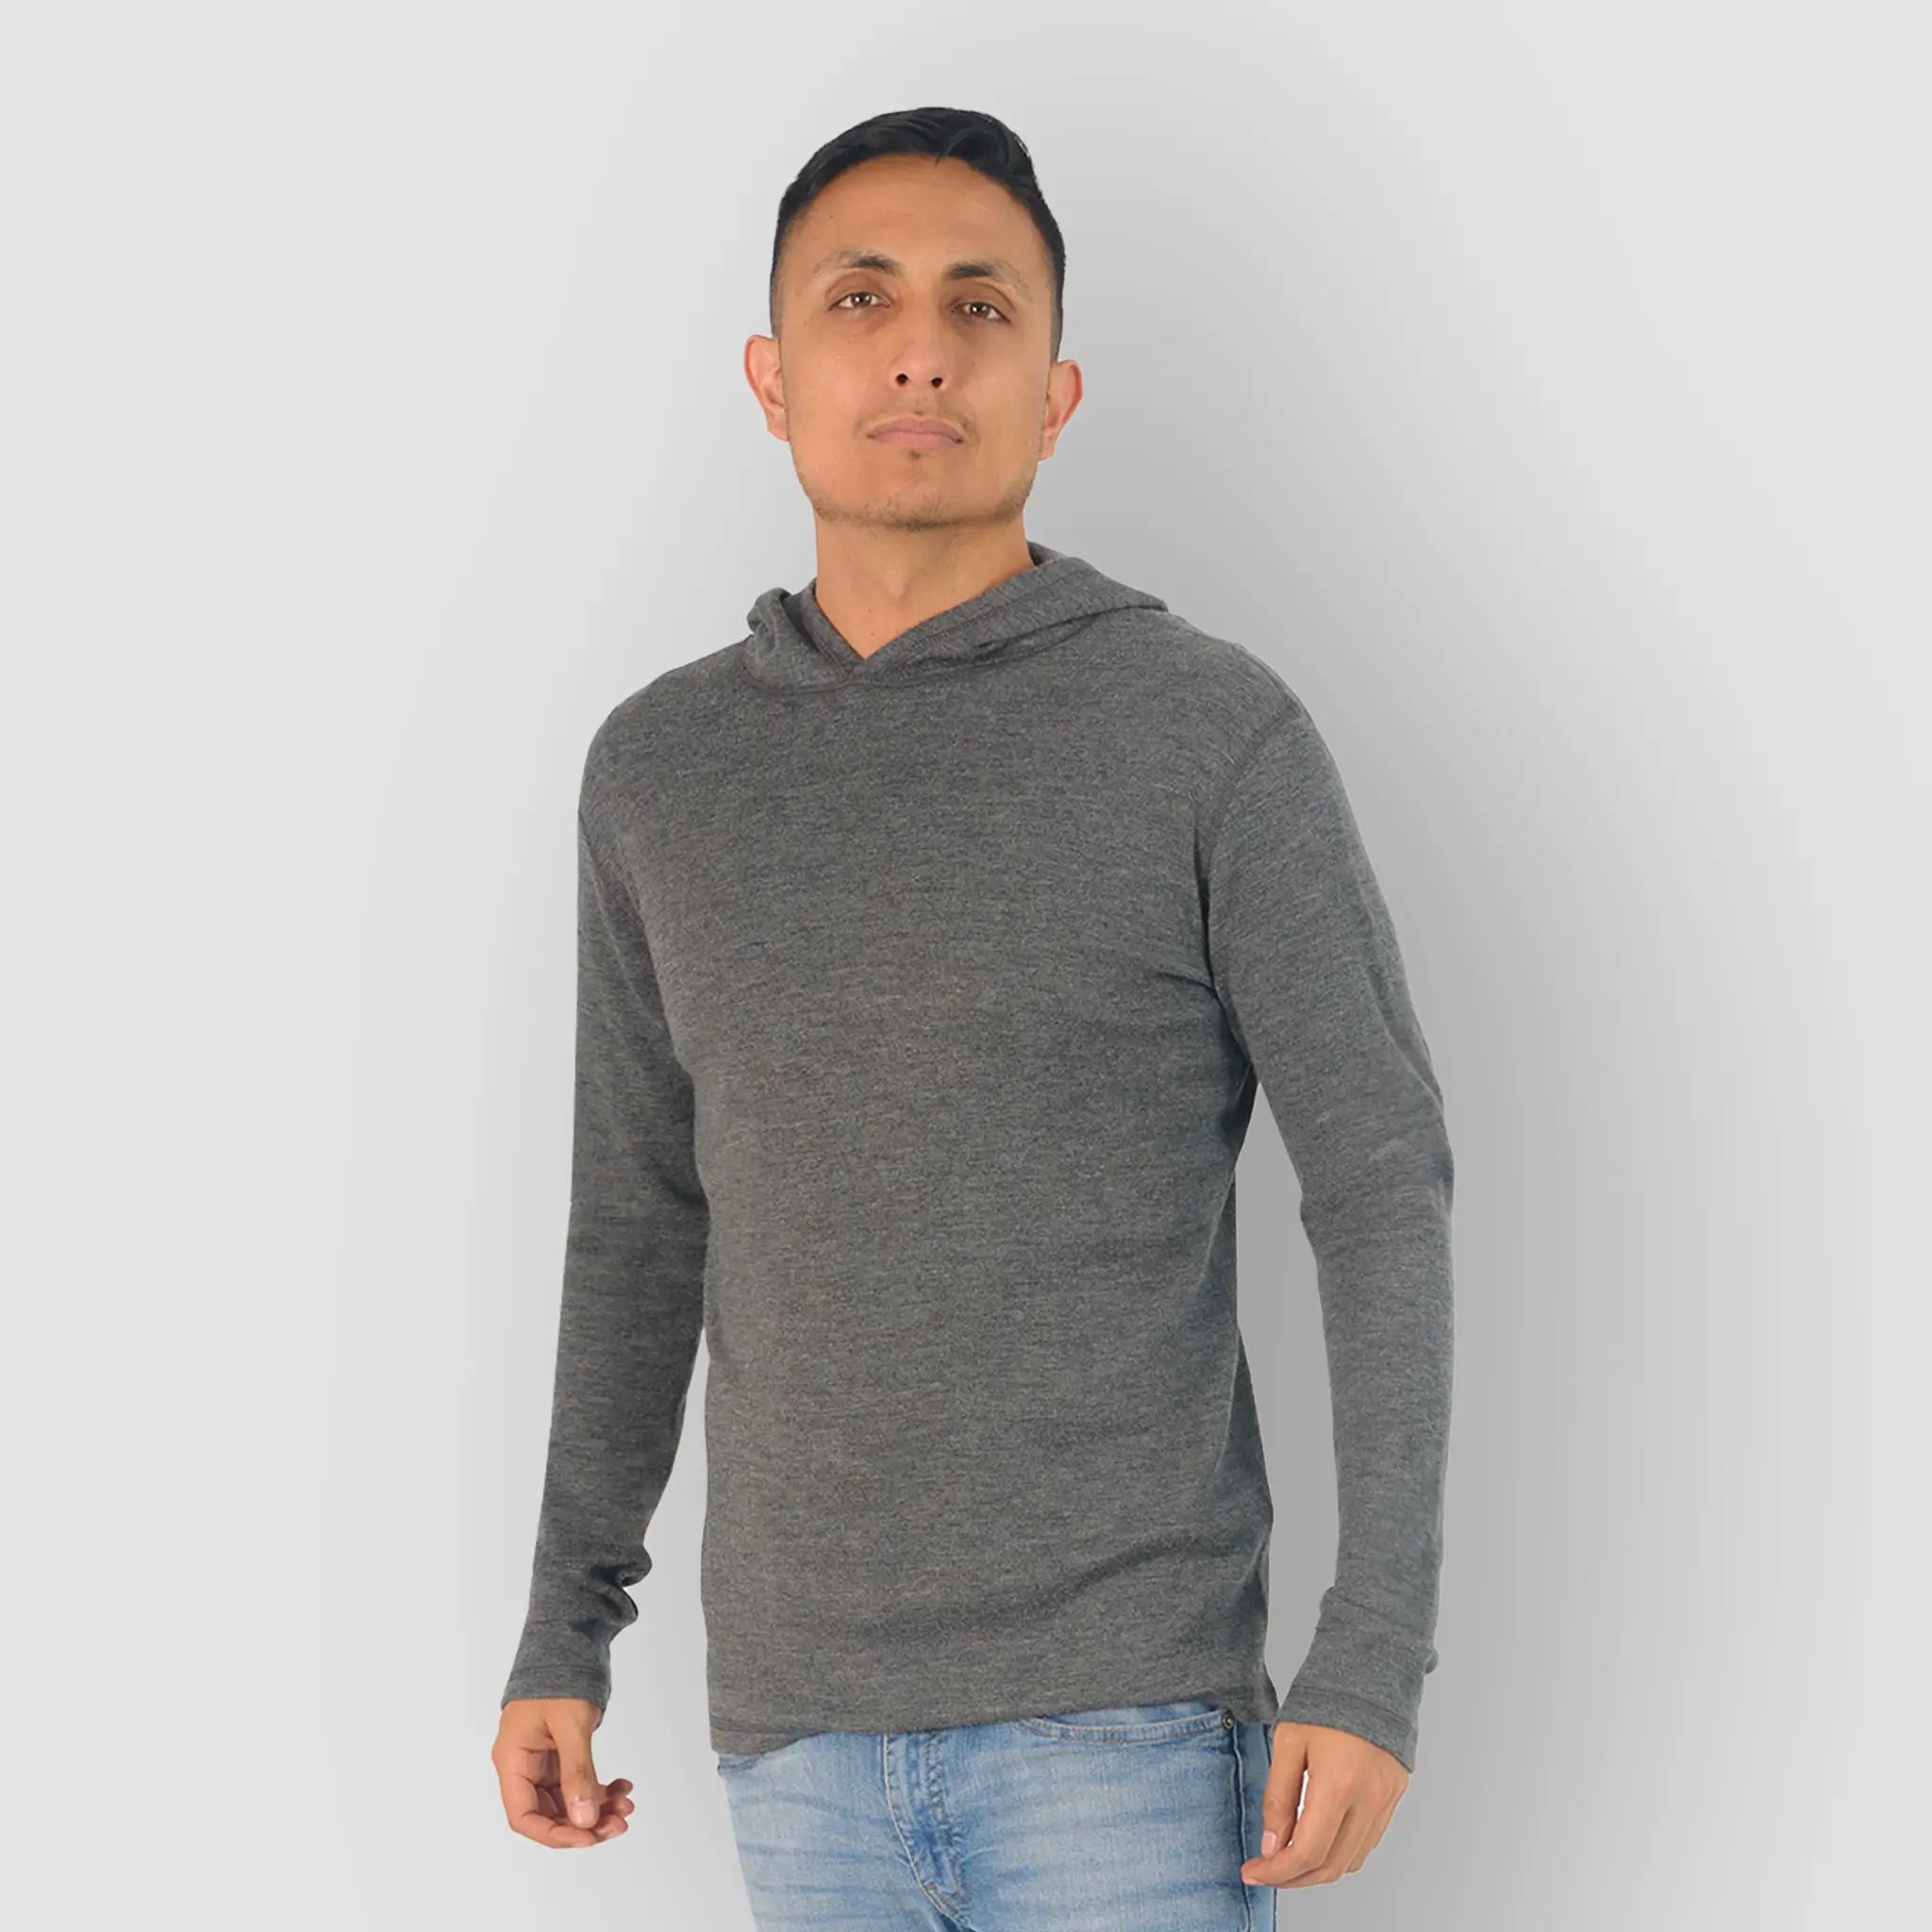 mens antibacterial pullover hoodie lightweight color gray